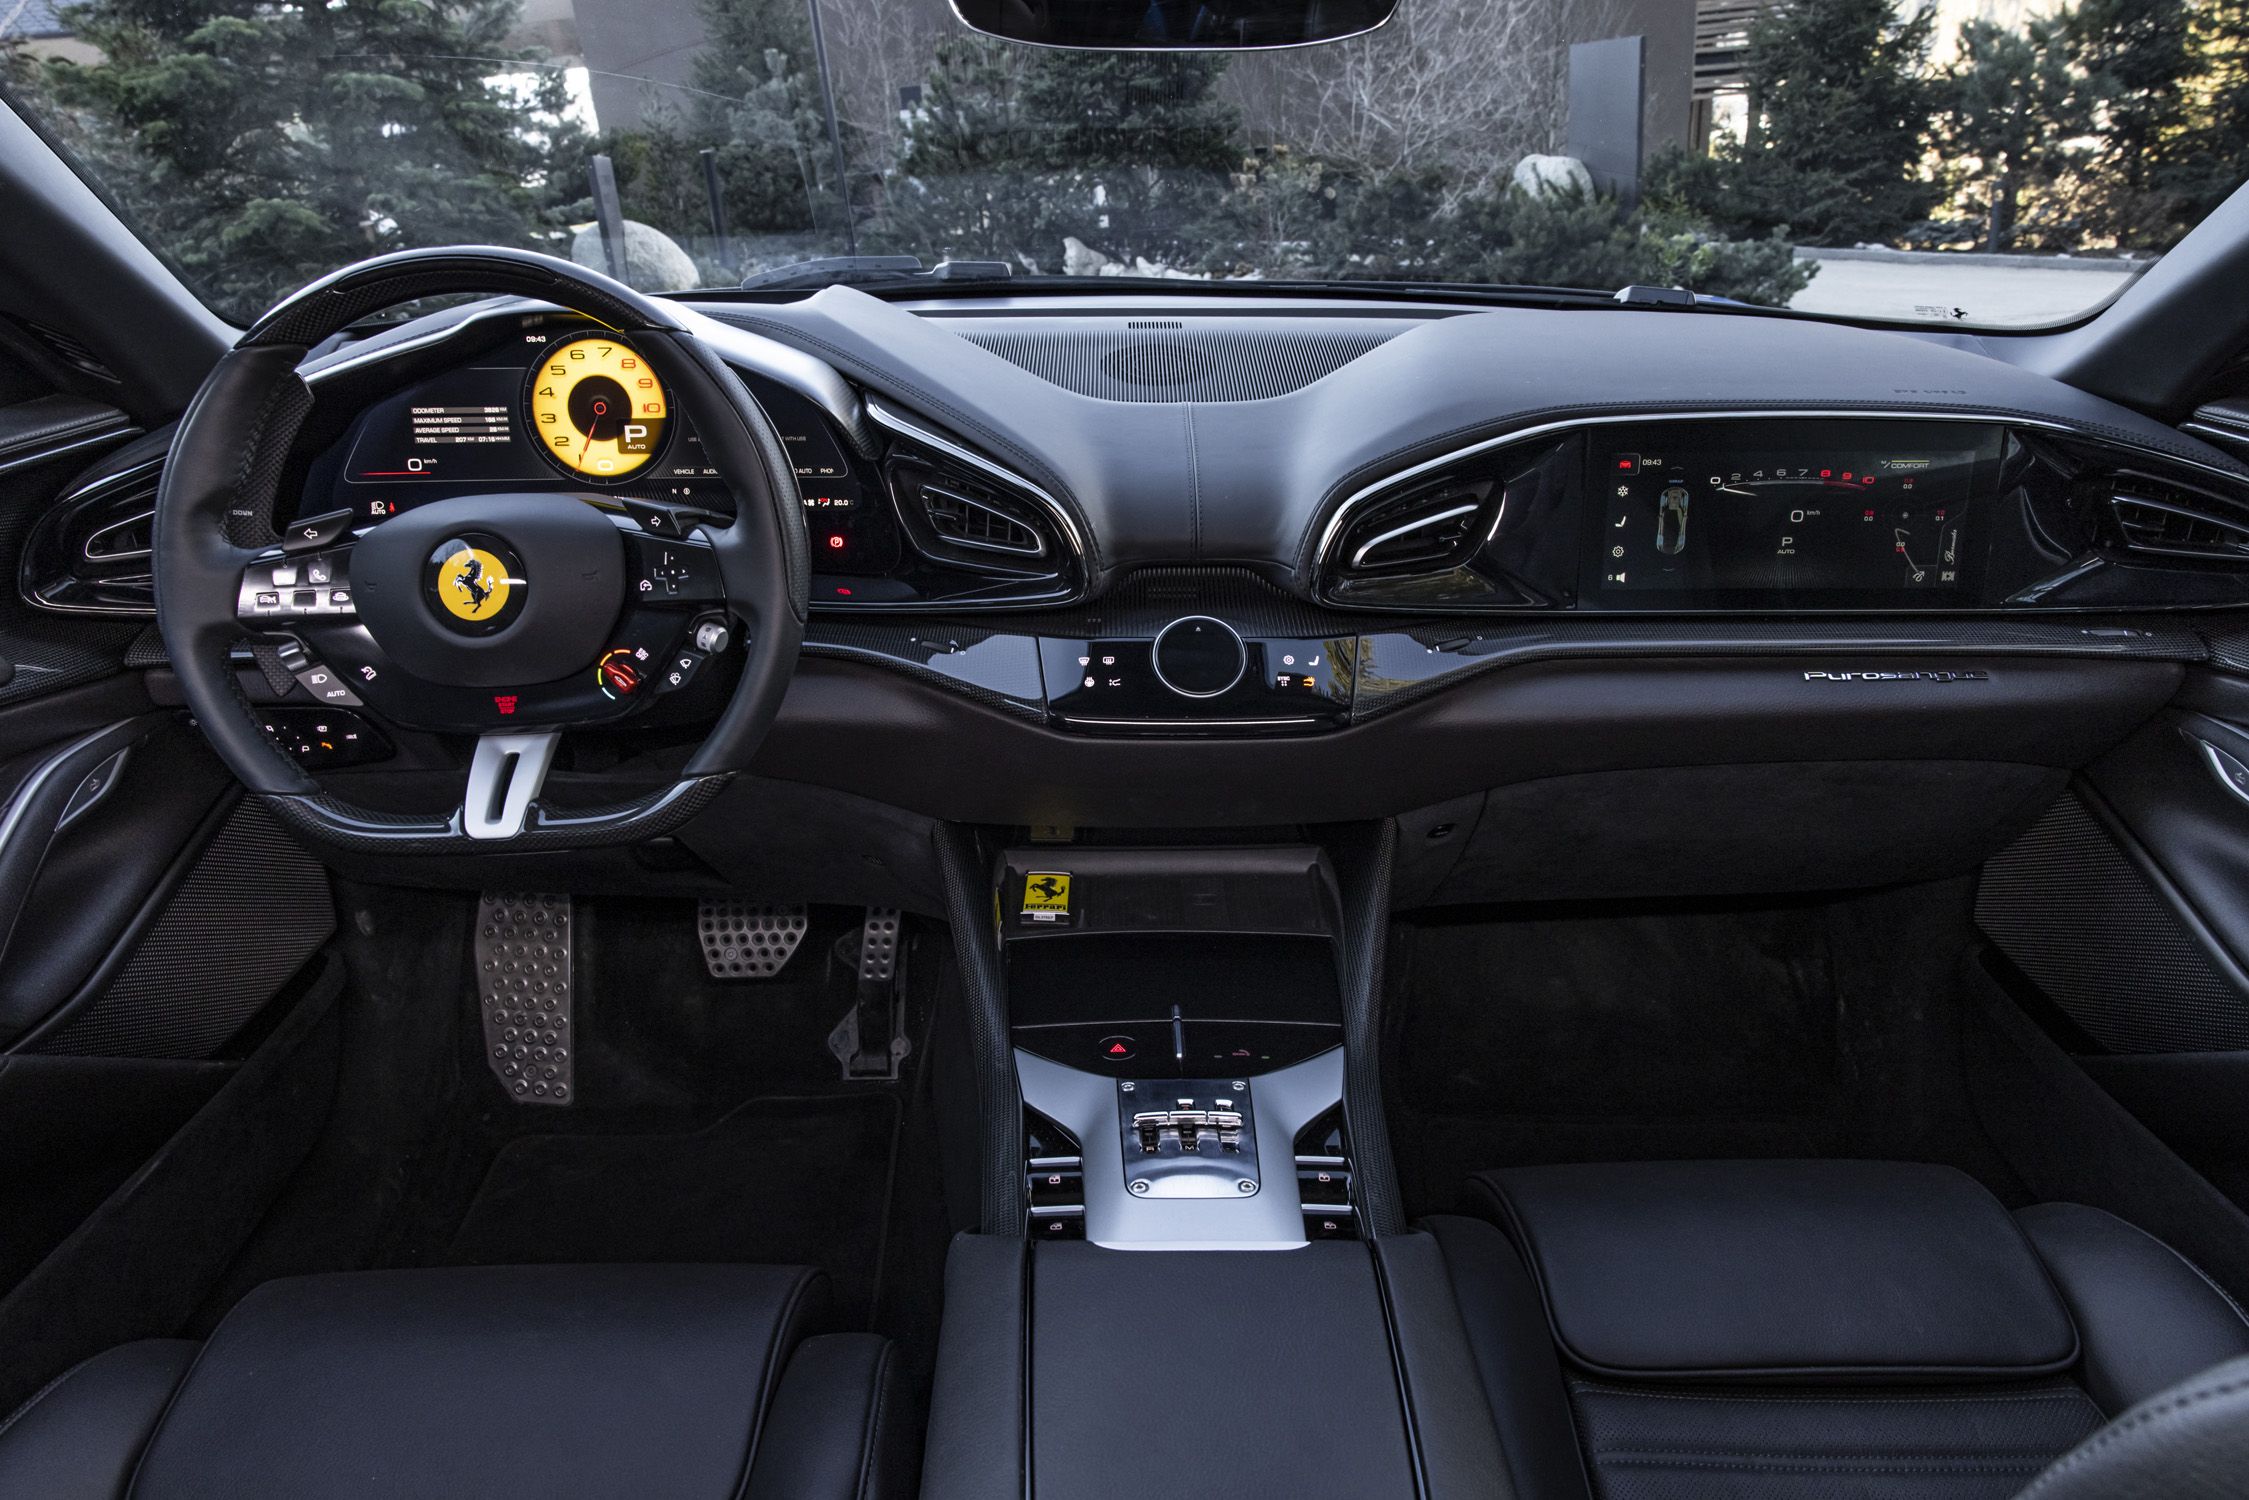 2023 Ferrari Purosangue Review: $393,000 Luxury SUV They Swore